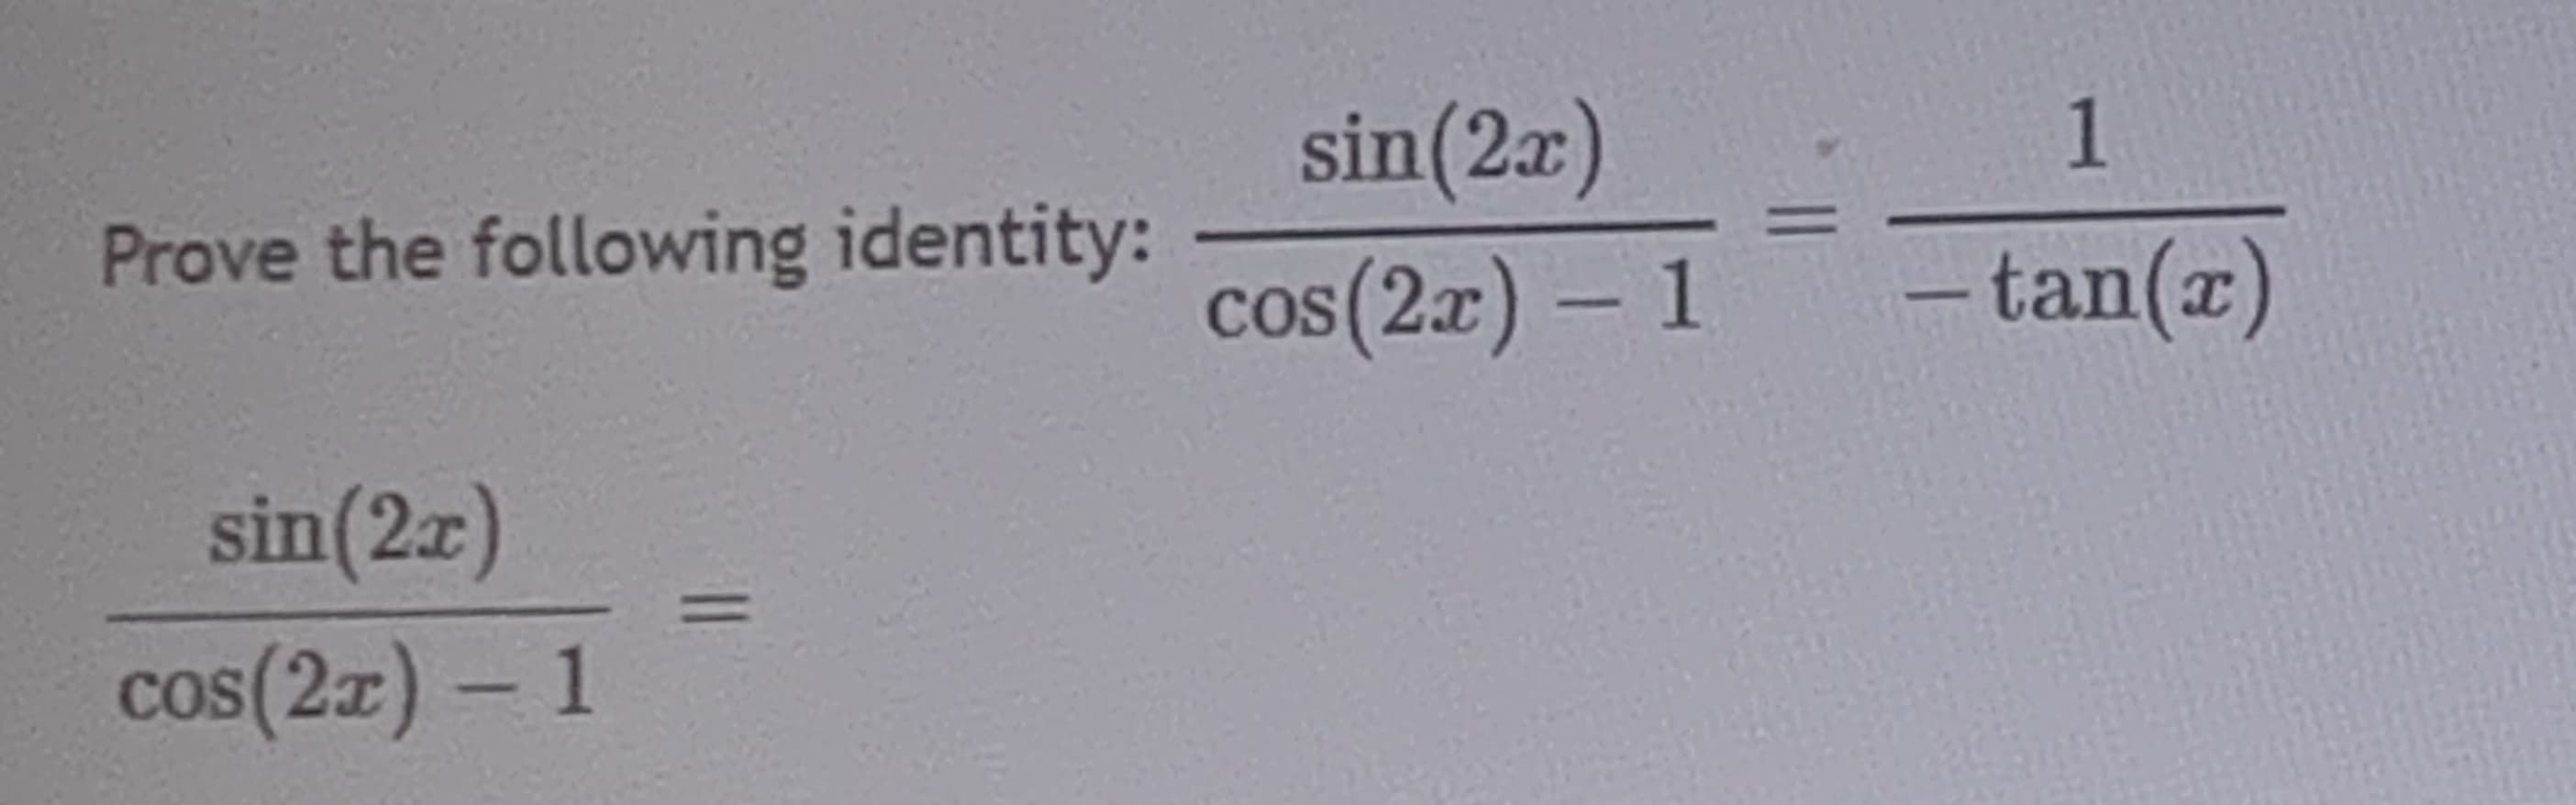 sin(2x)
1
Prove the following identity:
cos(2x) - 1
- tan(x)
sin(2x)
%3D
cos(2z) - 1
